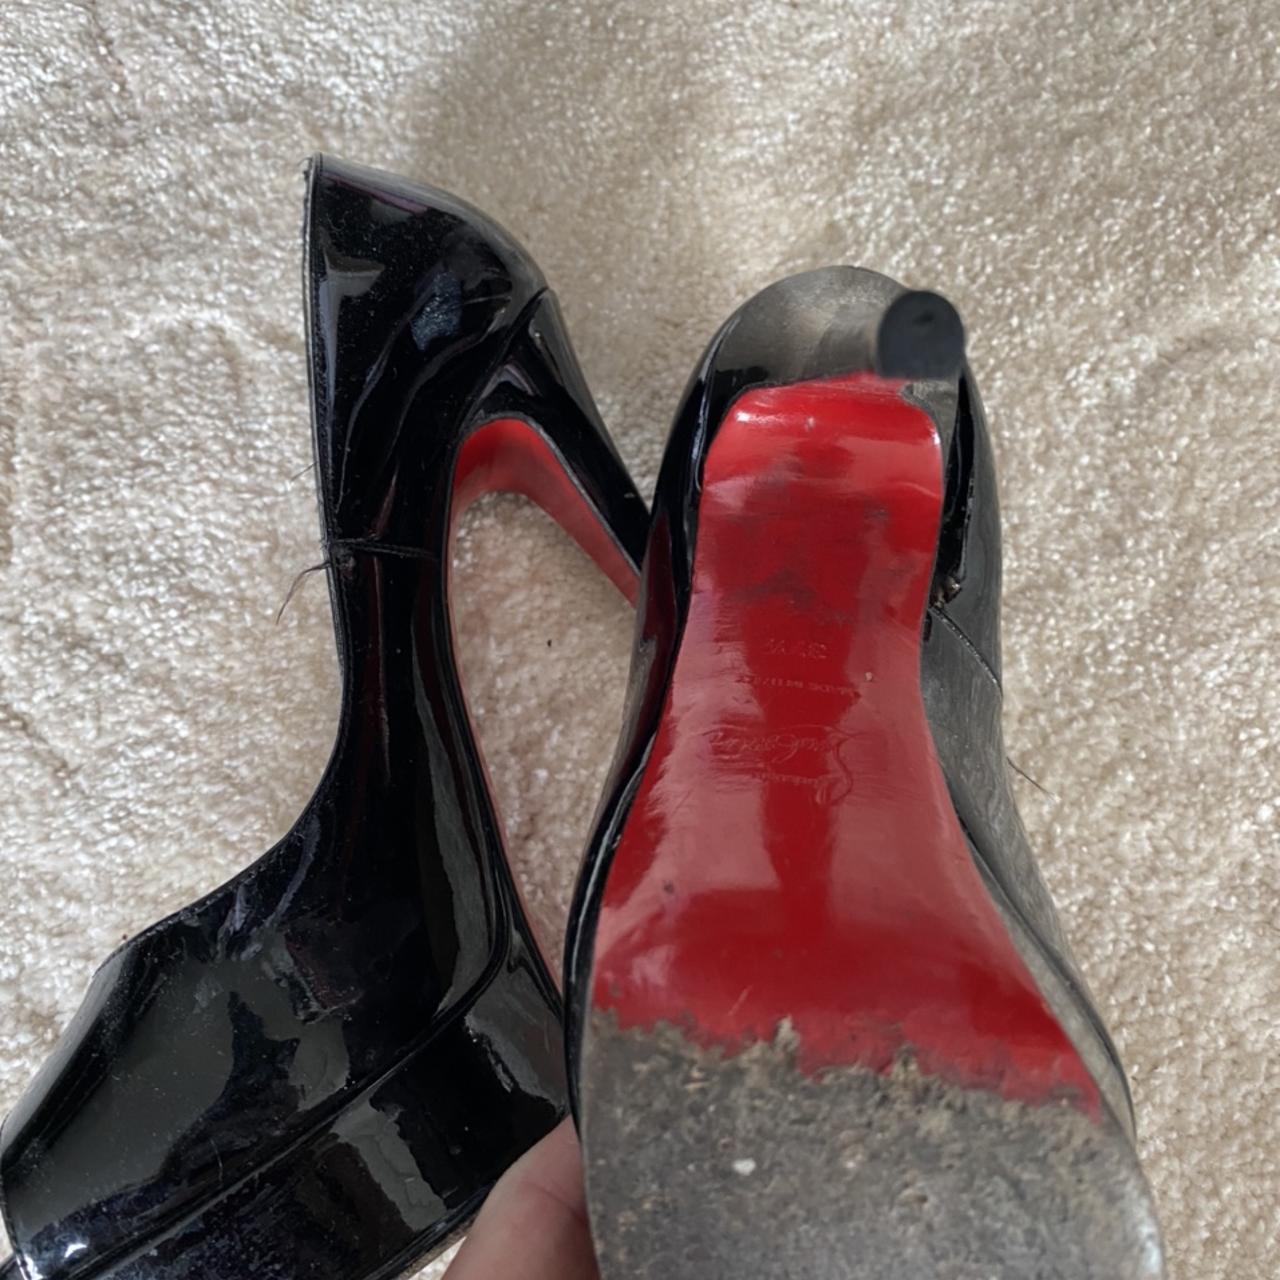 Christian Louboutin classy black heels Peep toe - Depop